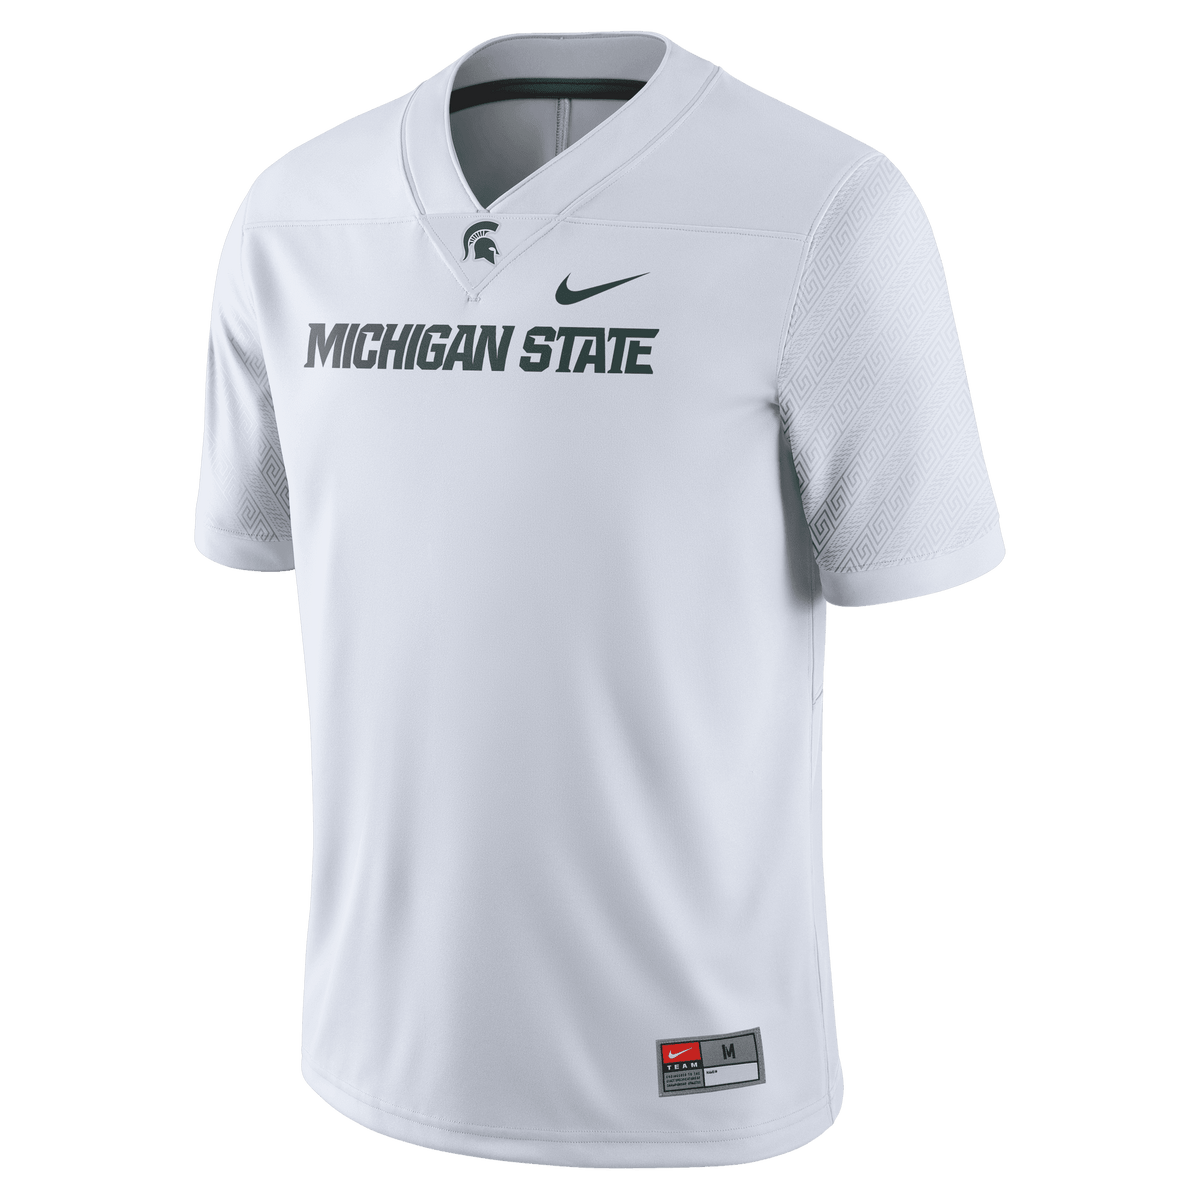 Nike Men's Michigan State Spartans Green Replica Basketball Shorts, Medium